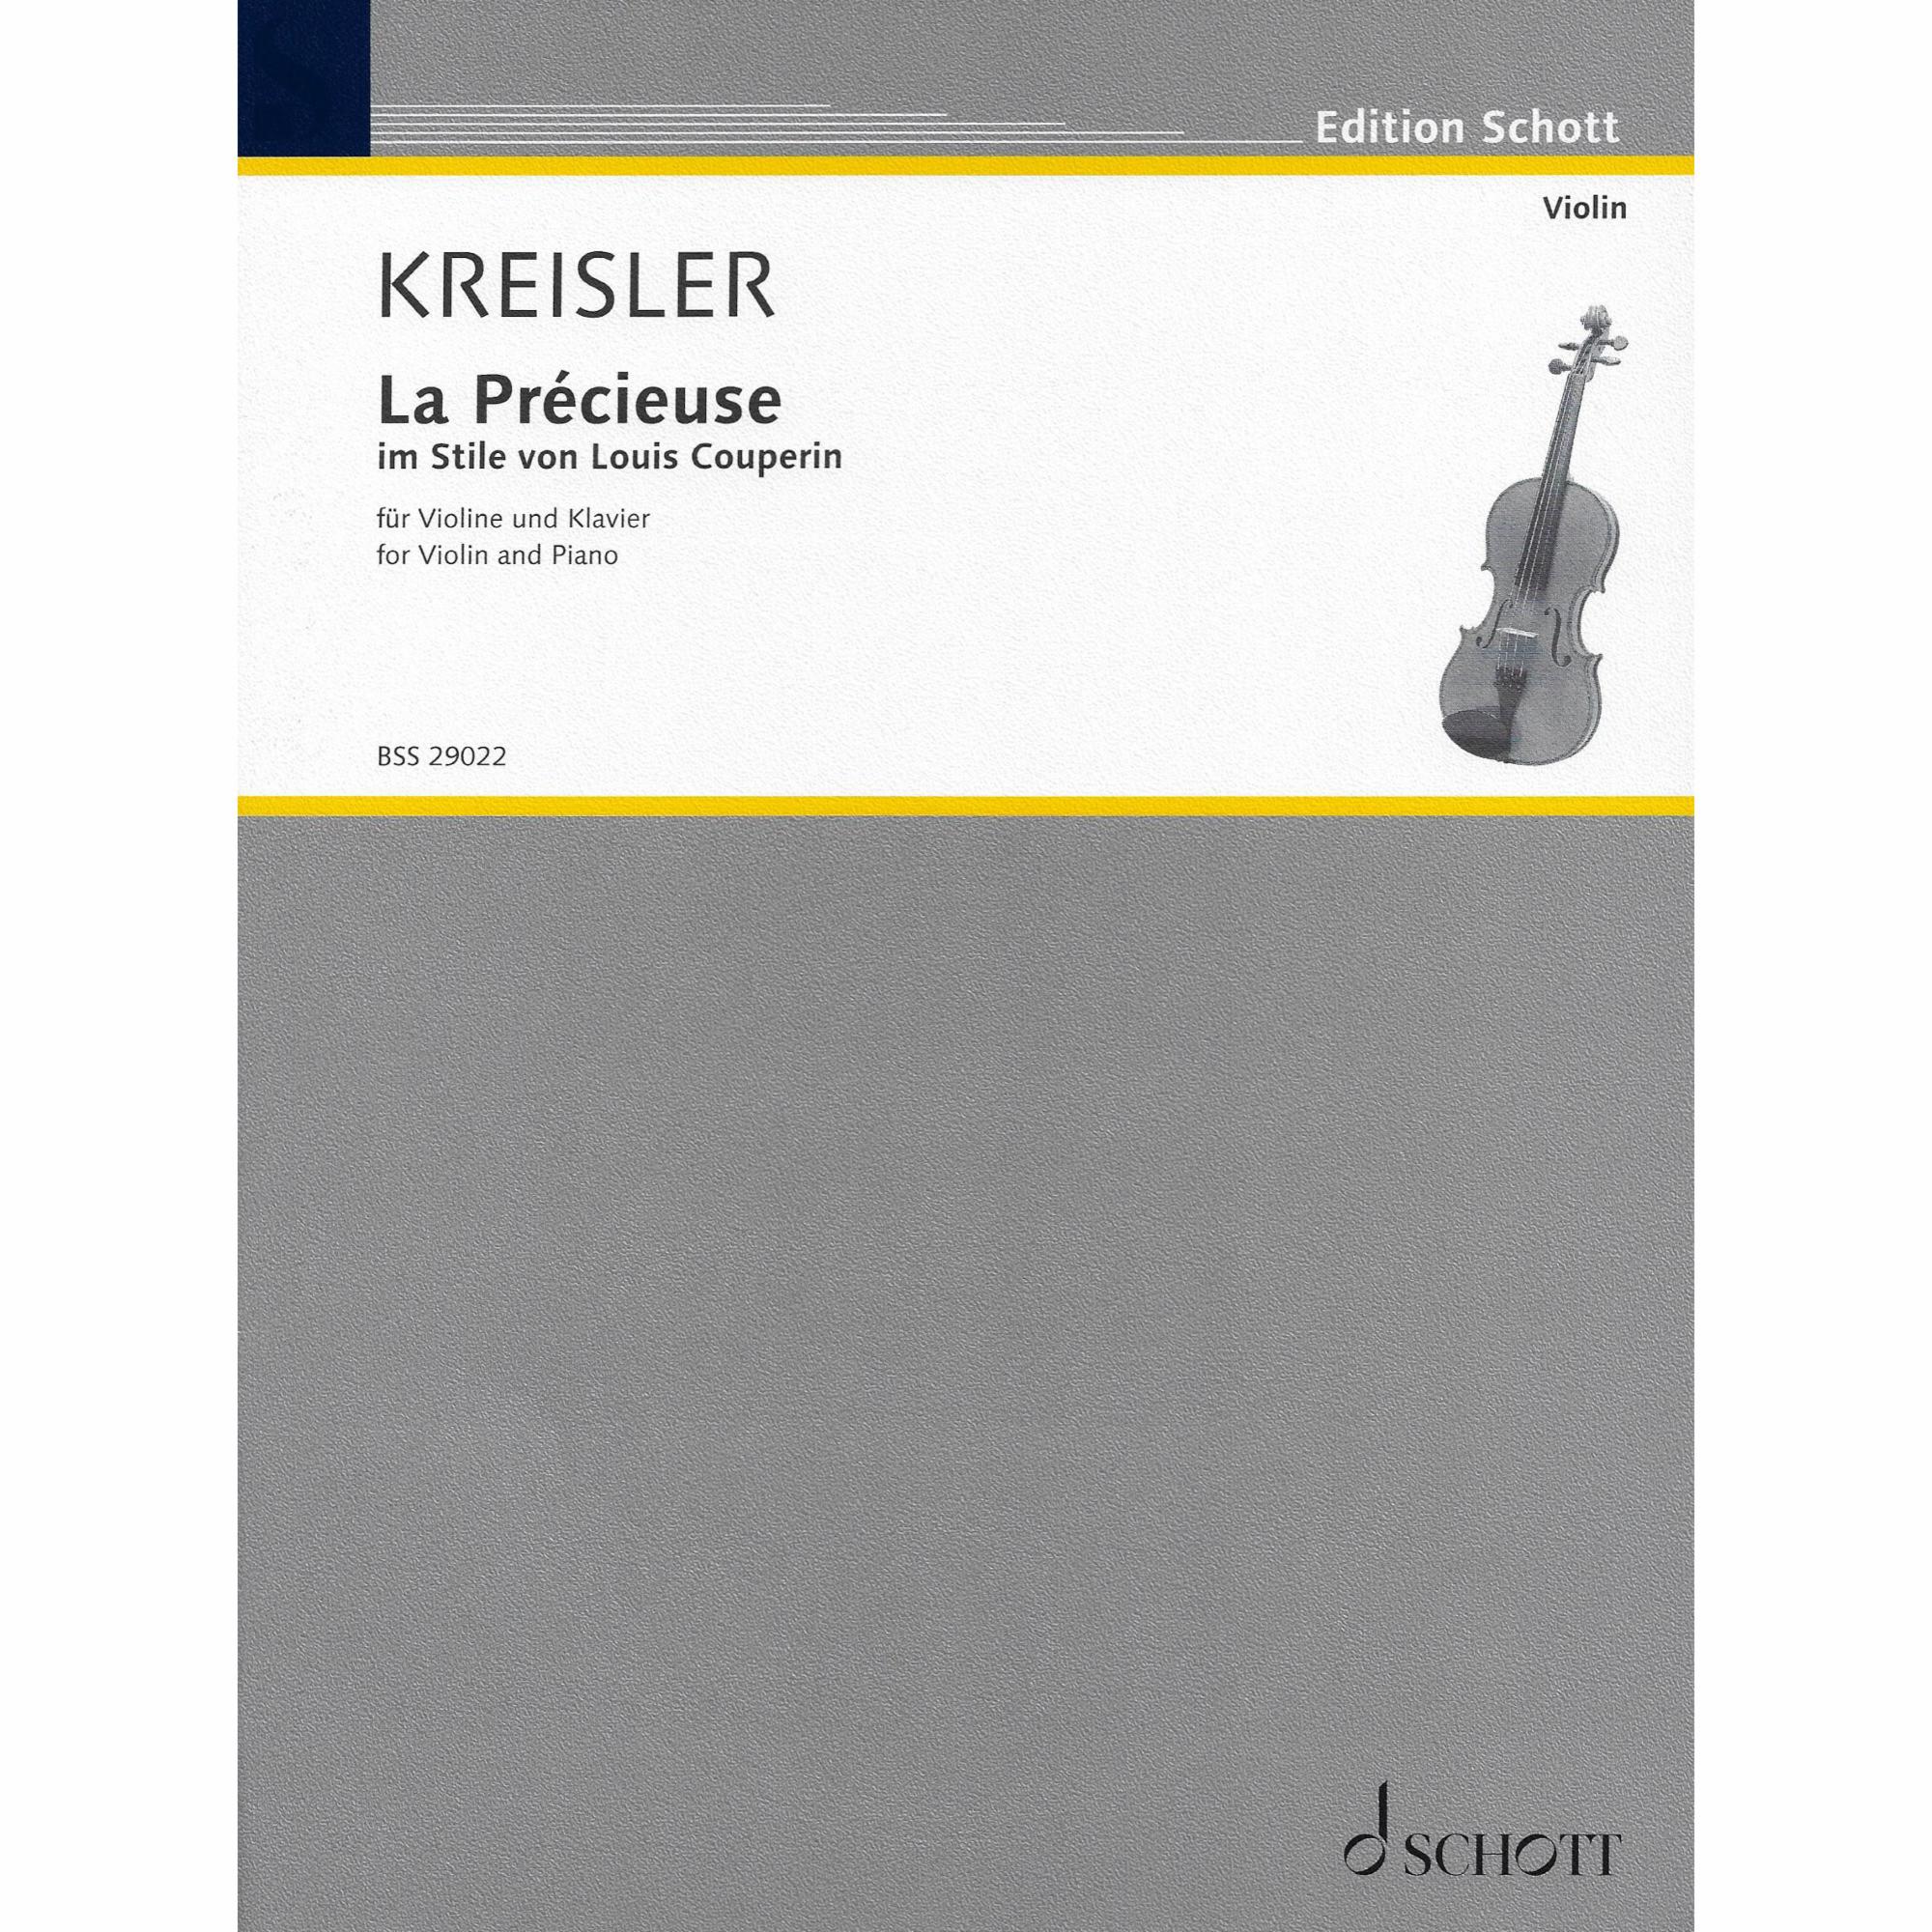 Kreisler -- La Precieuse for Violin and Piano